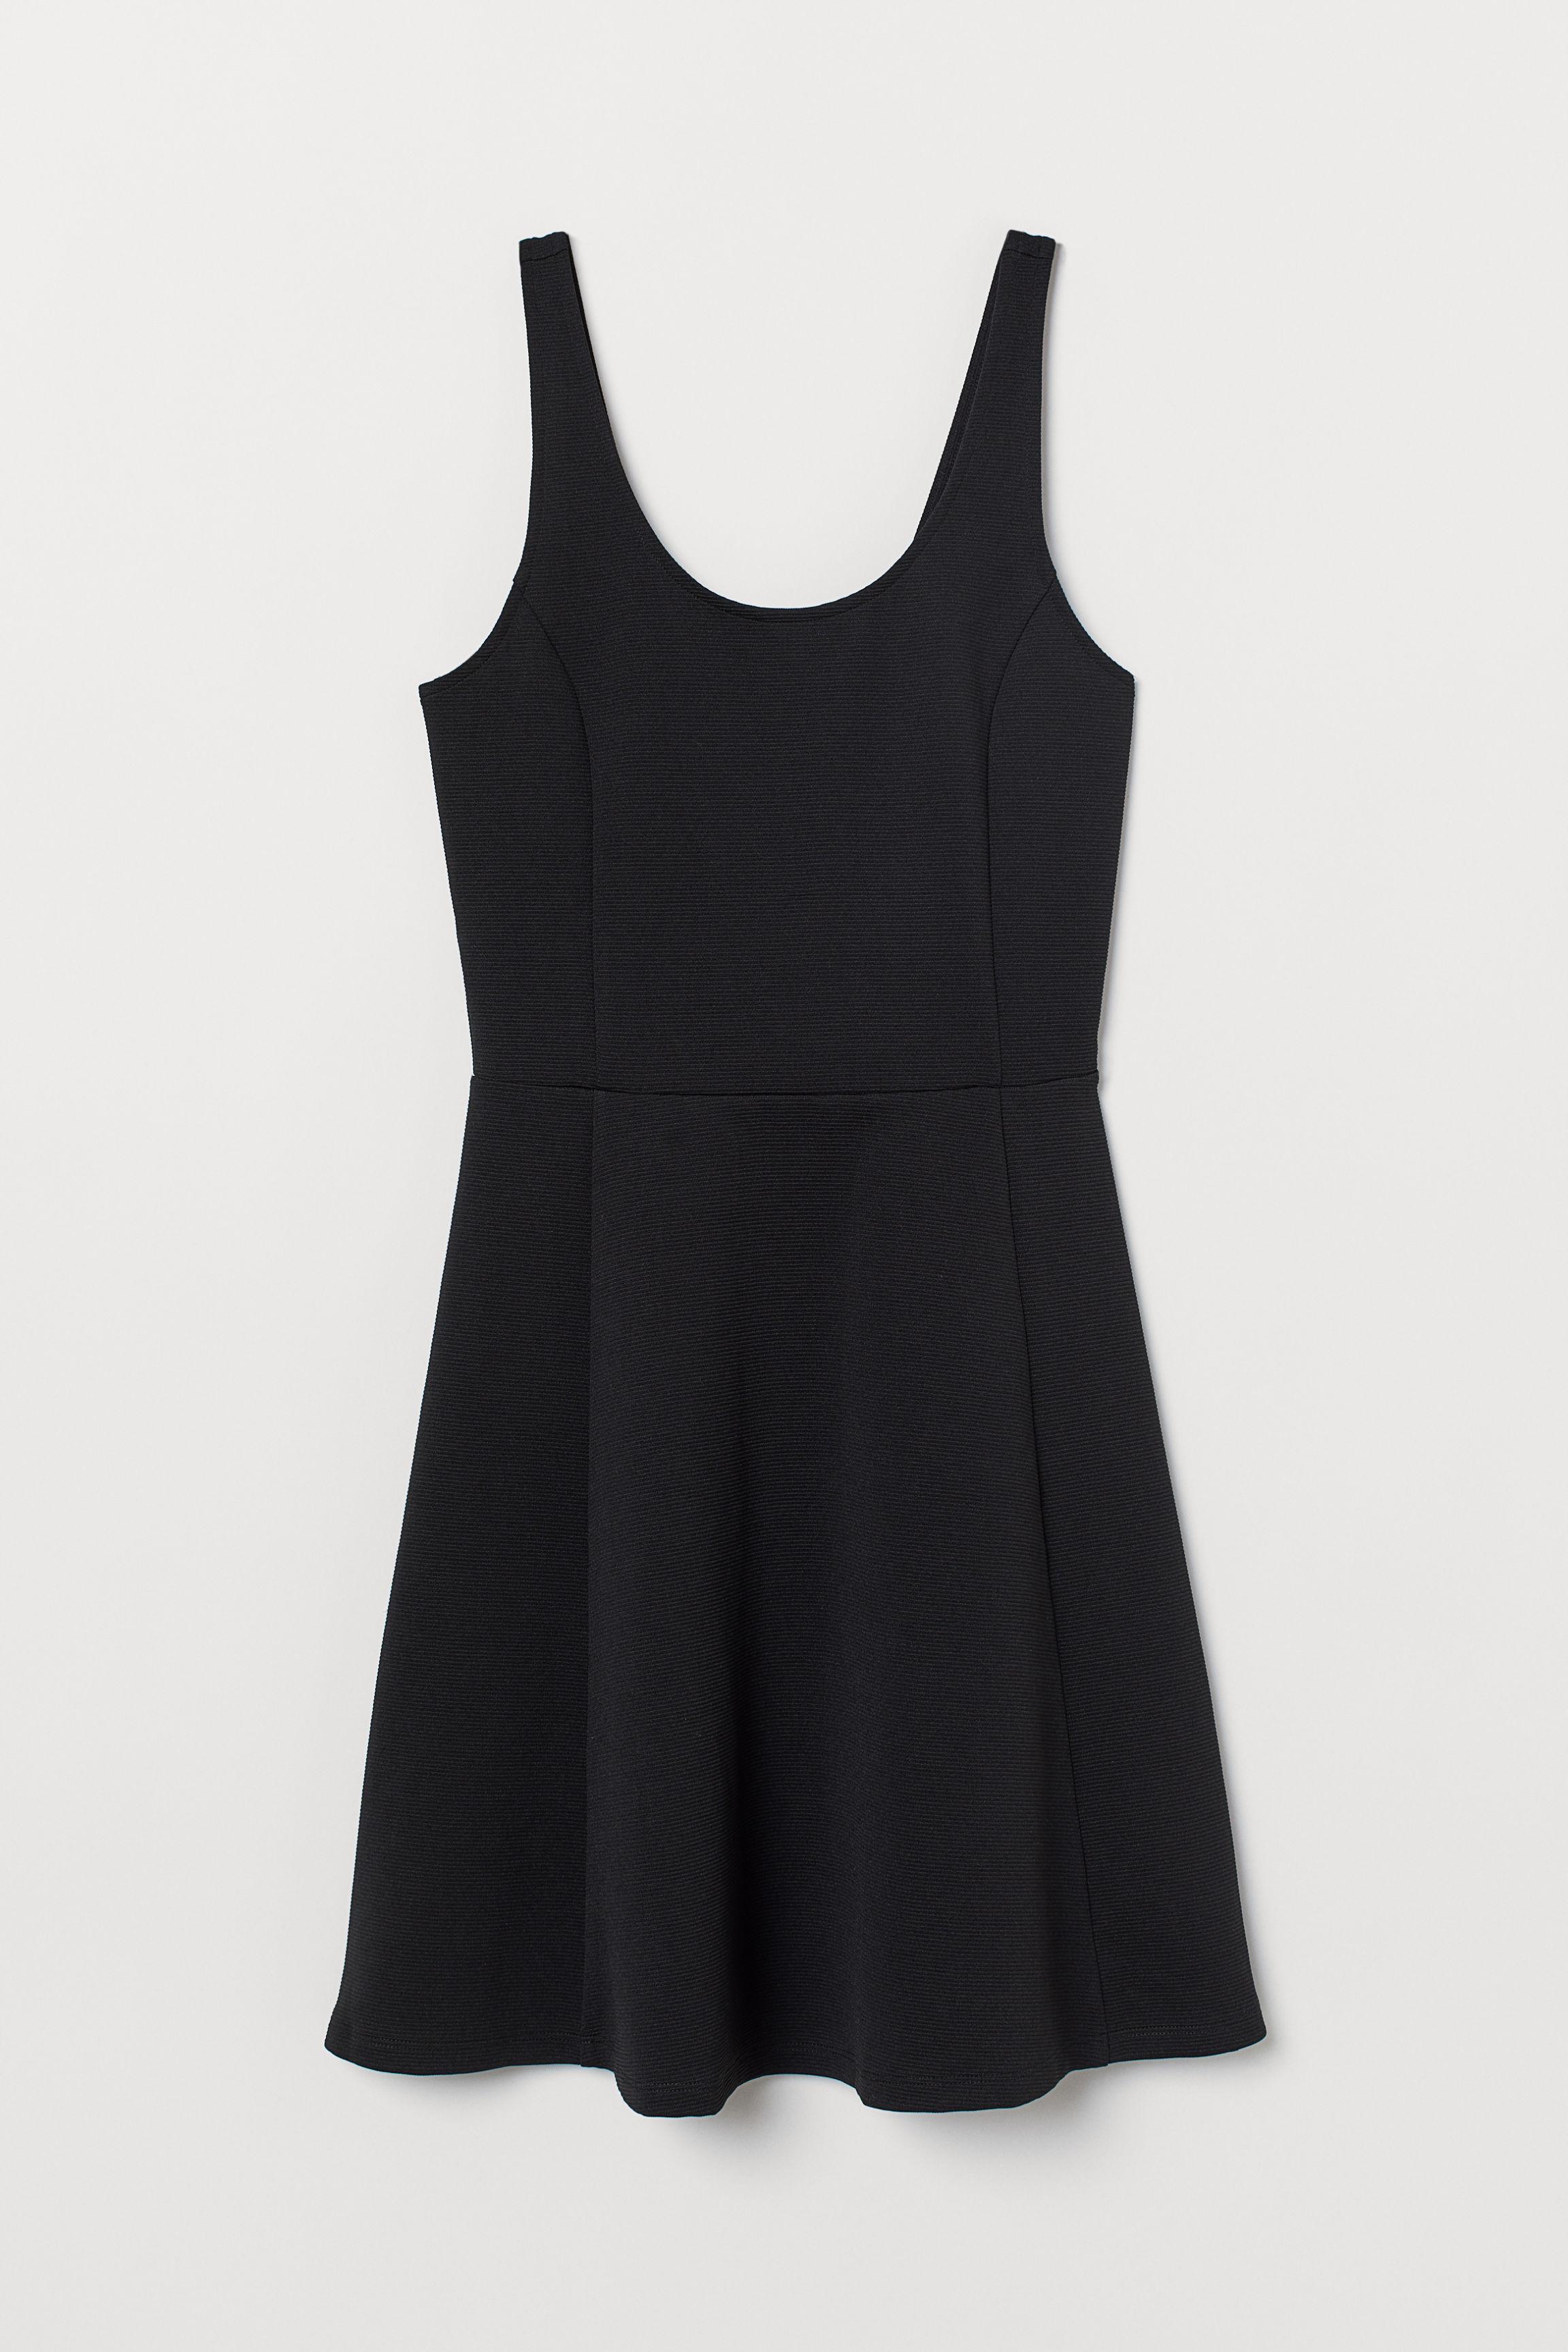 H&M Sleeveless Jersey Dress in Black - Lyst